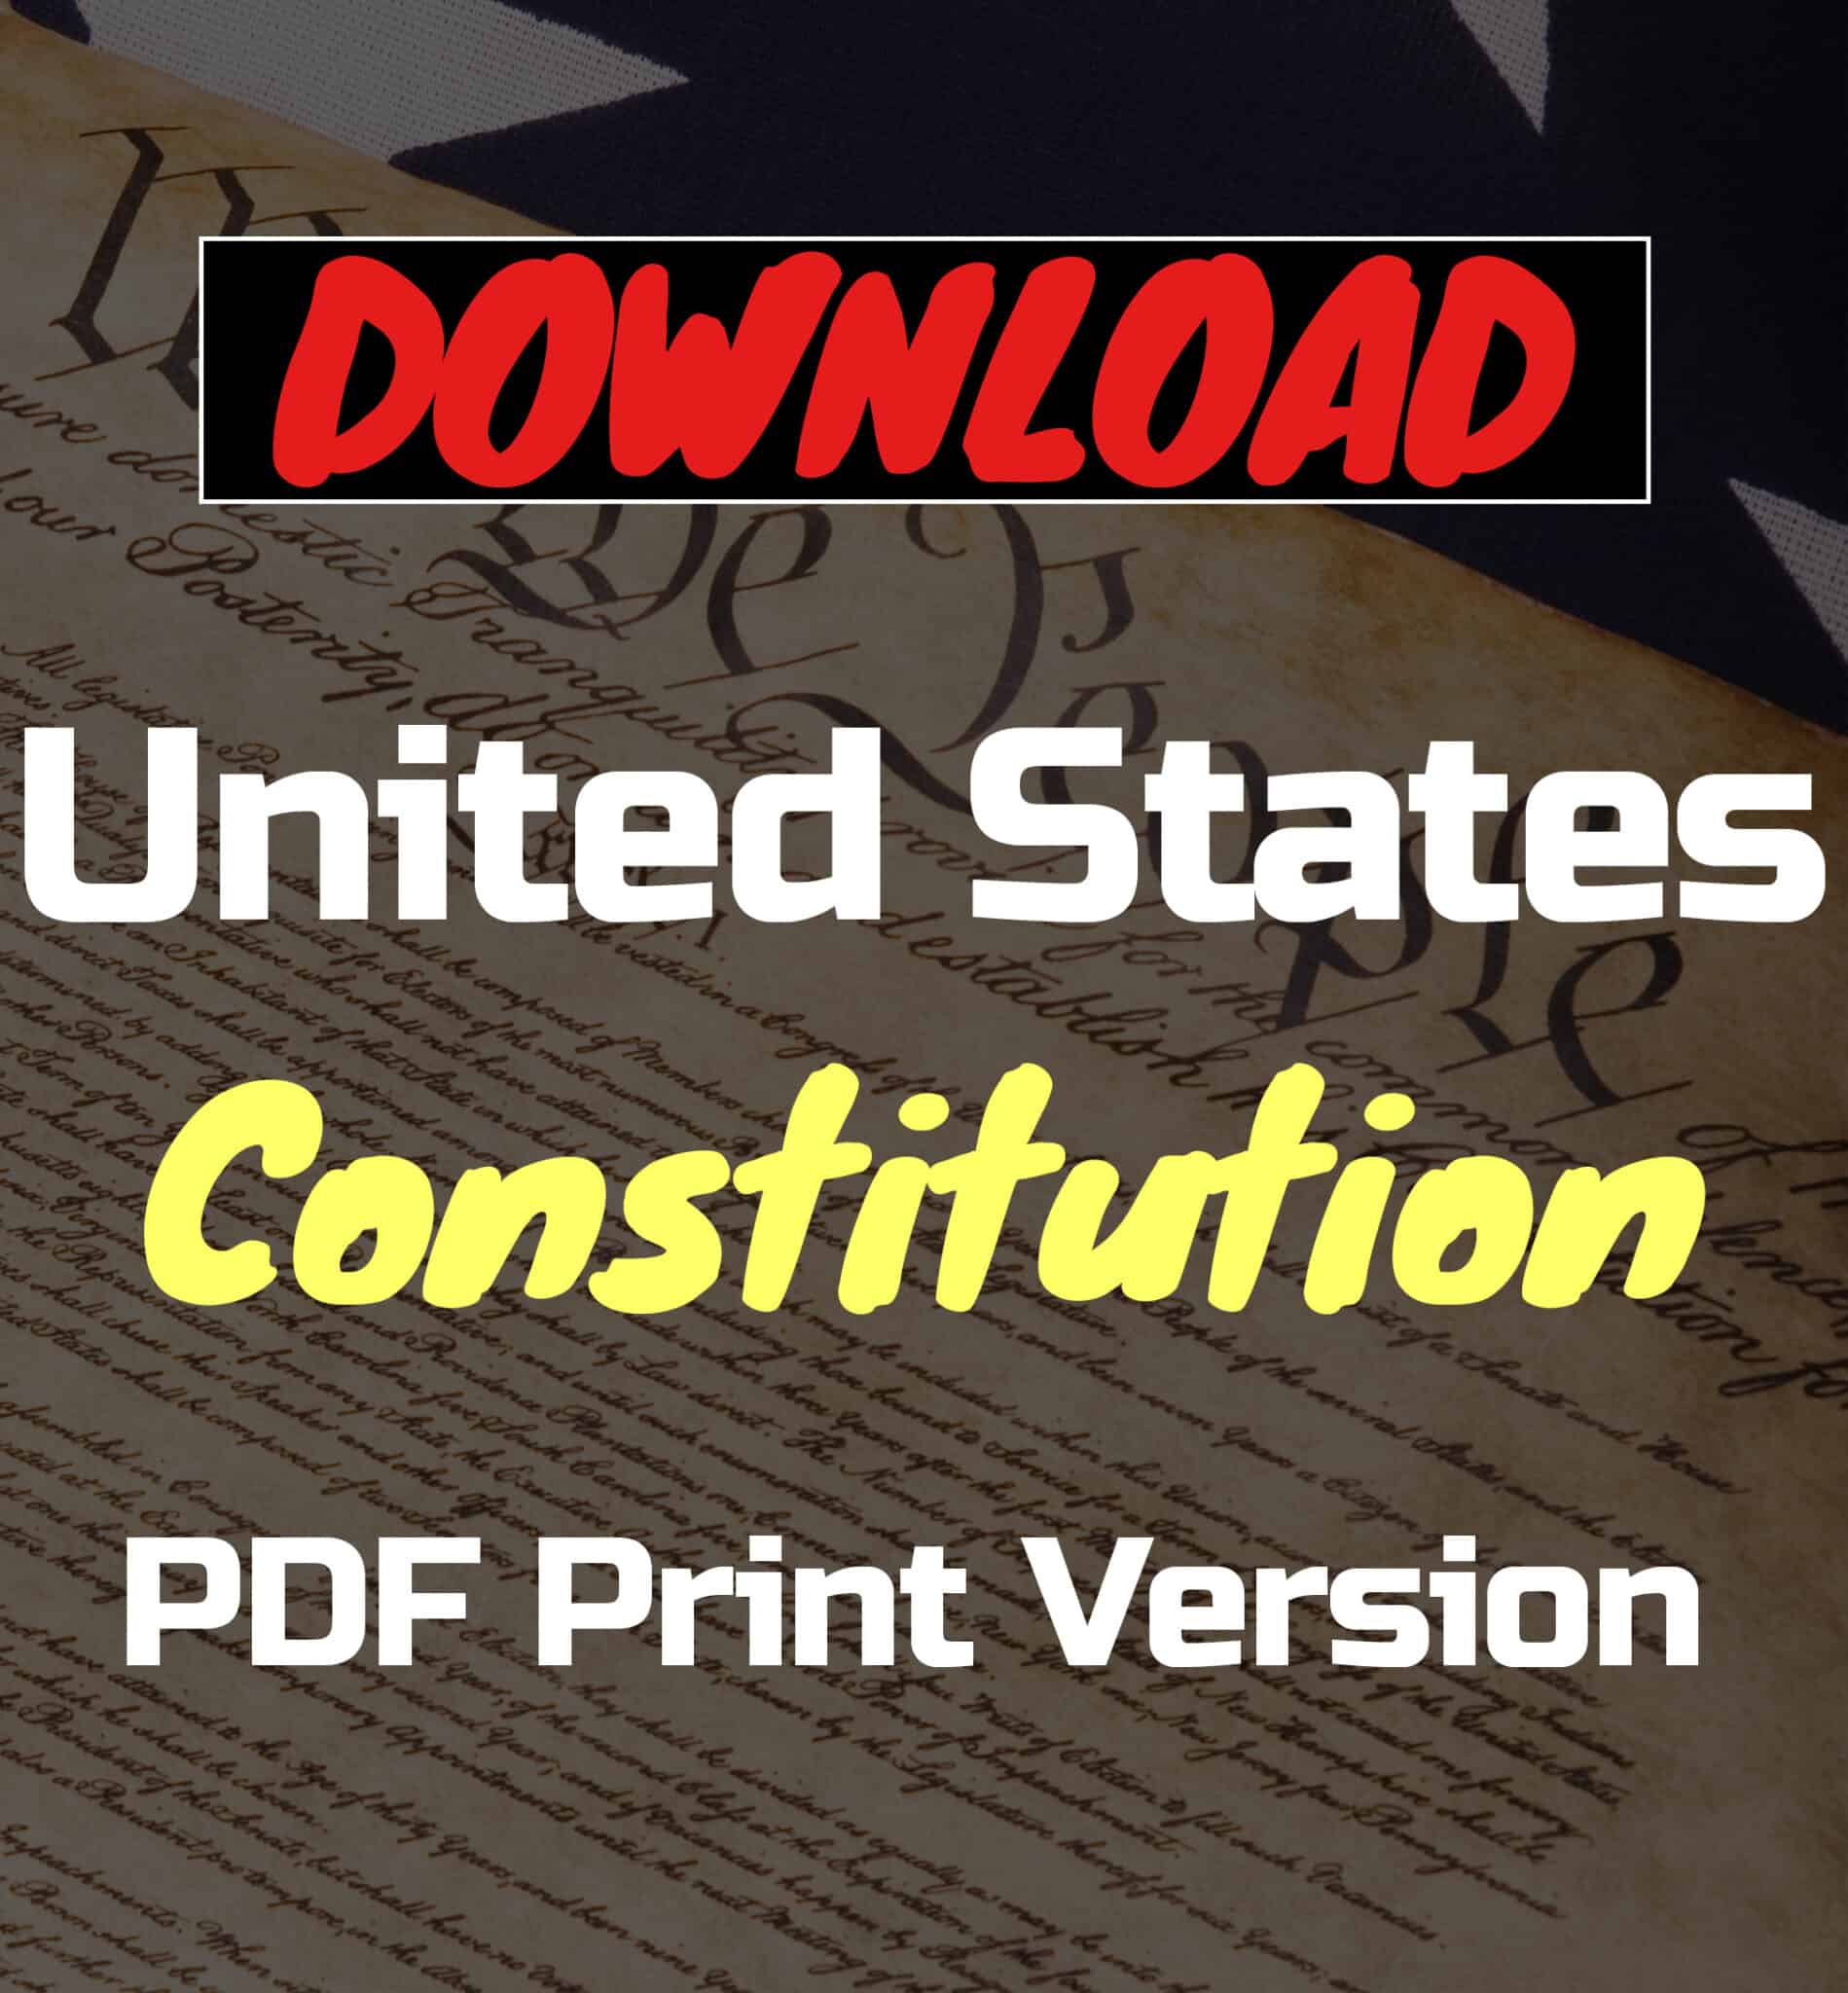 US Constitution button